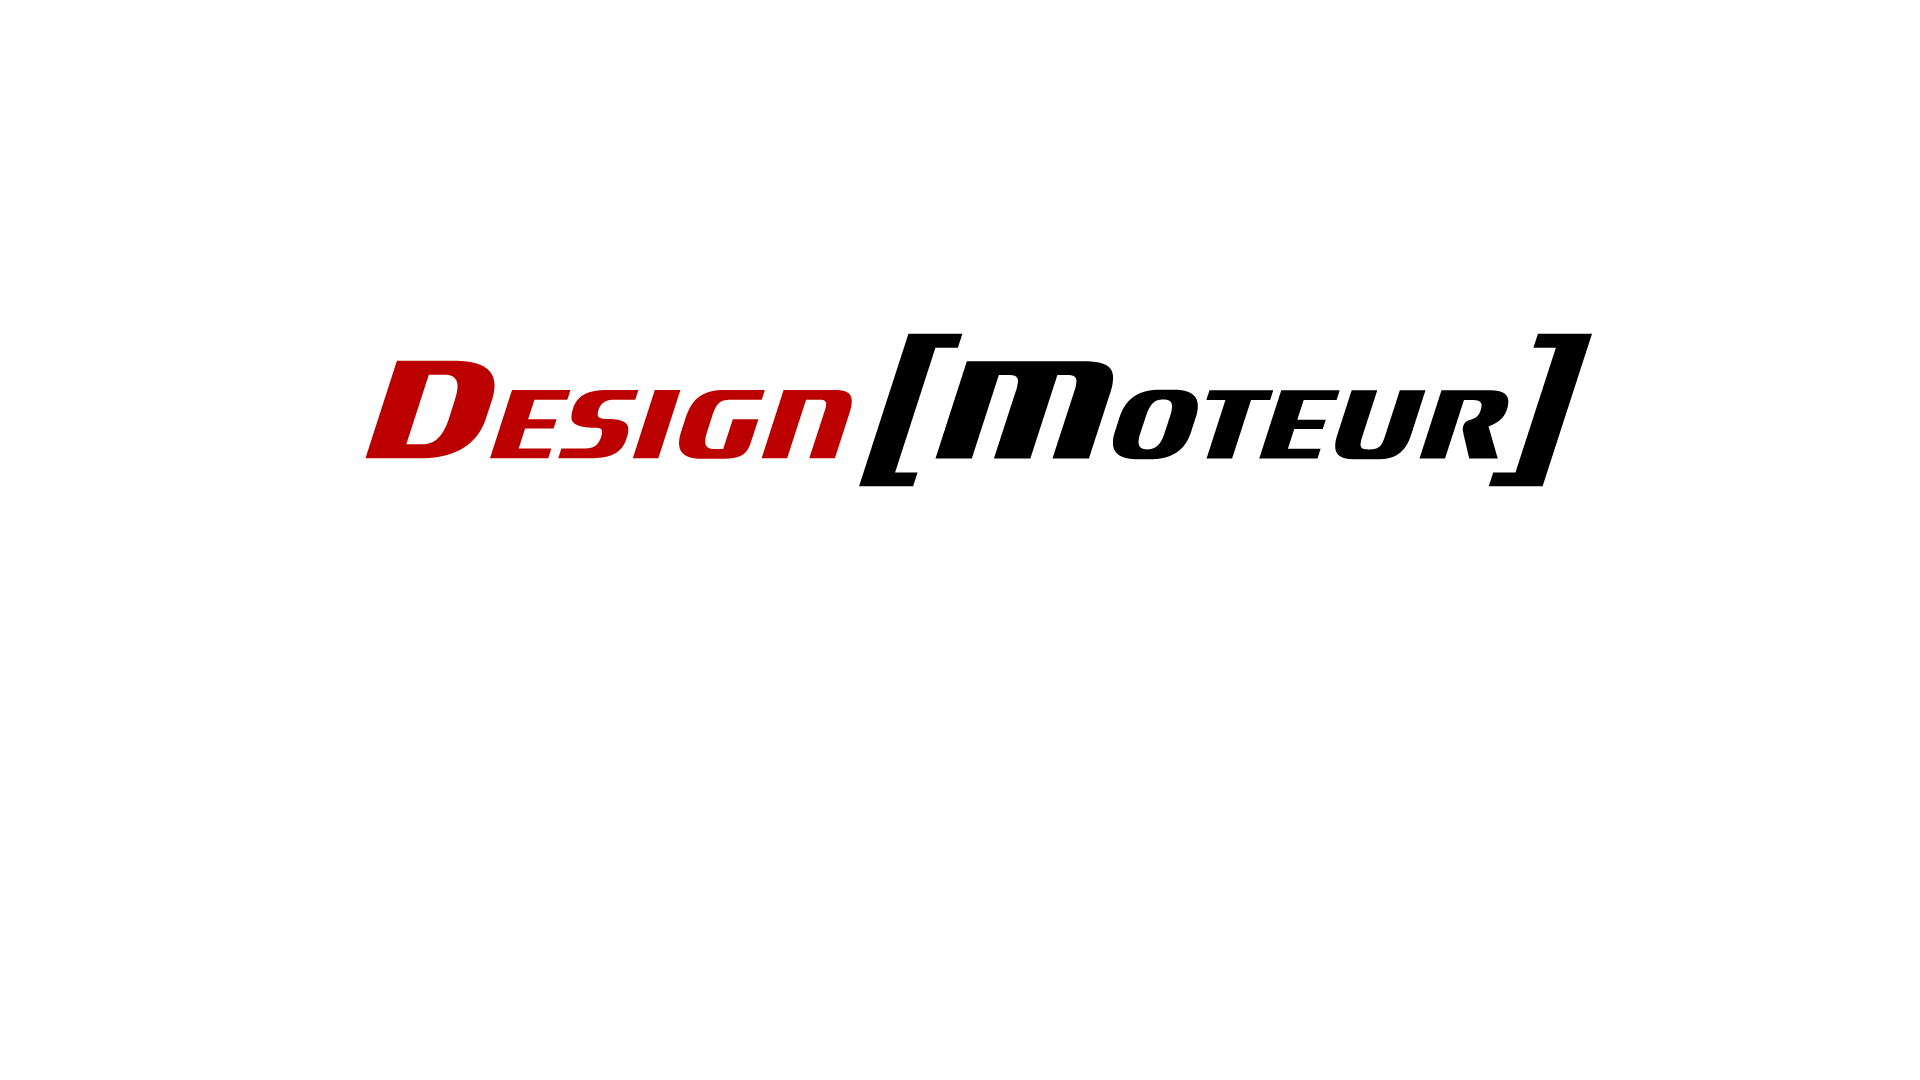 gif-2020-designmoteur-logo-day-n-night